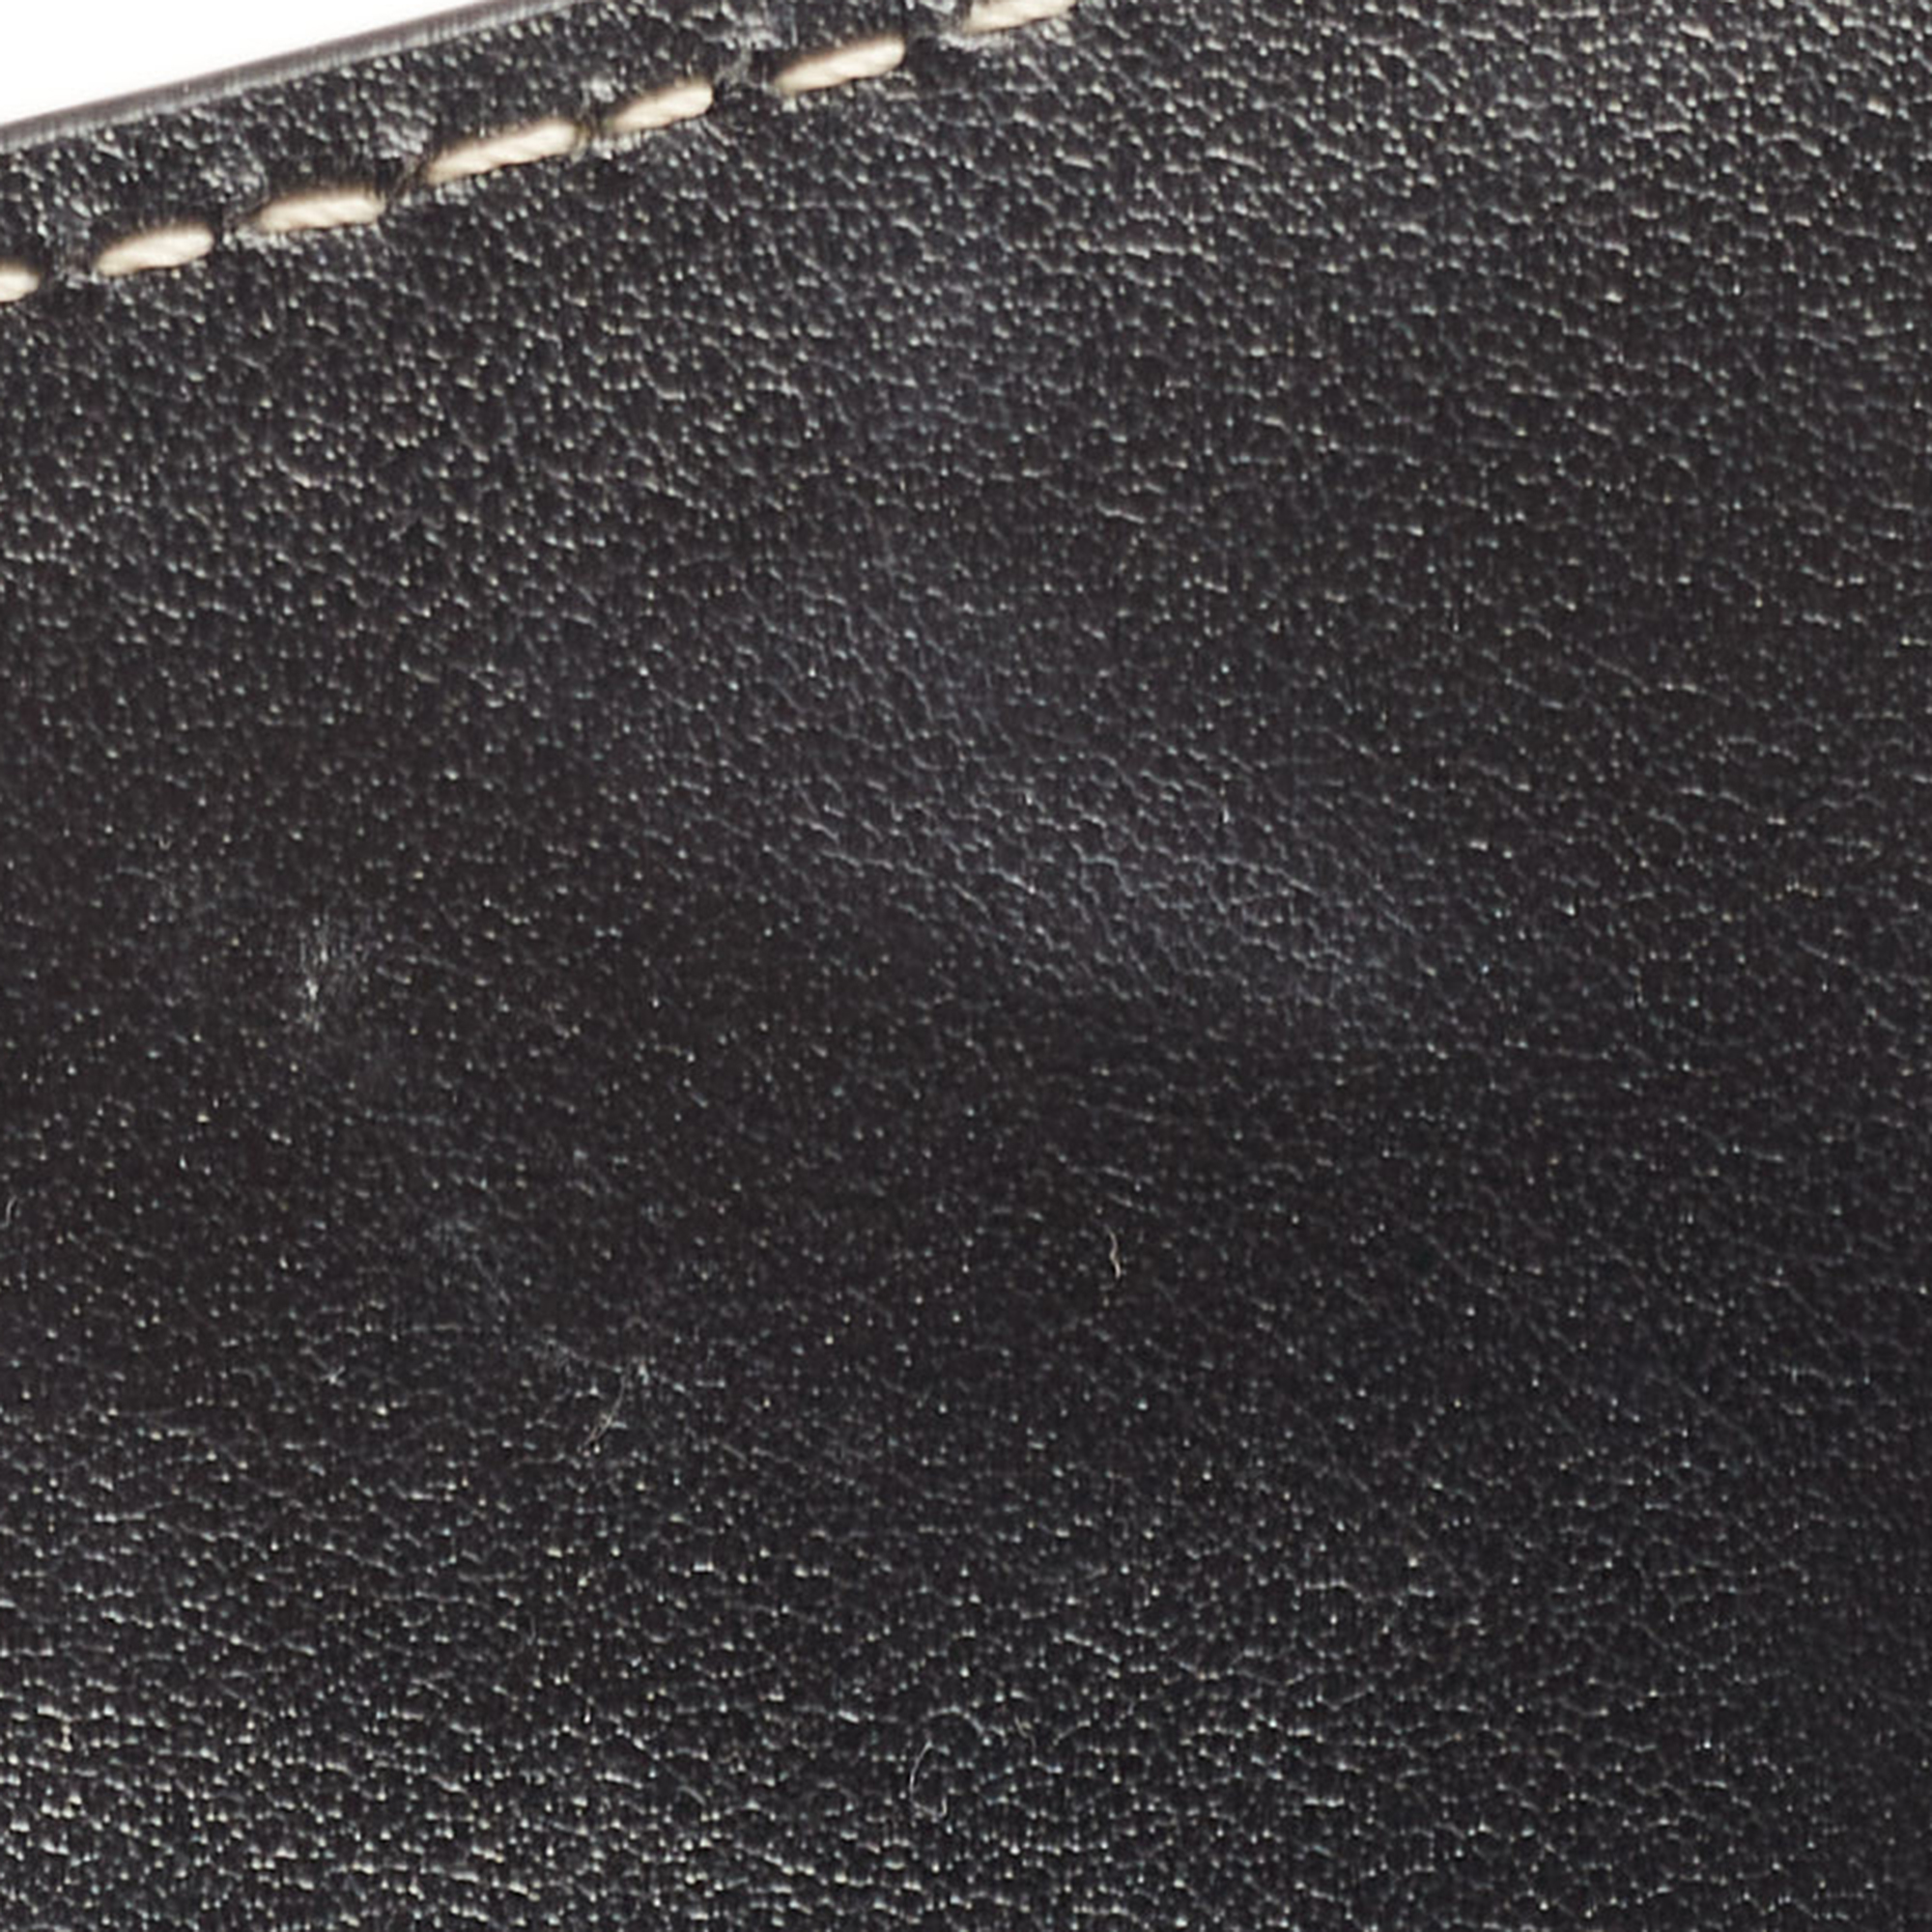 Burberry Black Leather Mini Pocket Tote